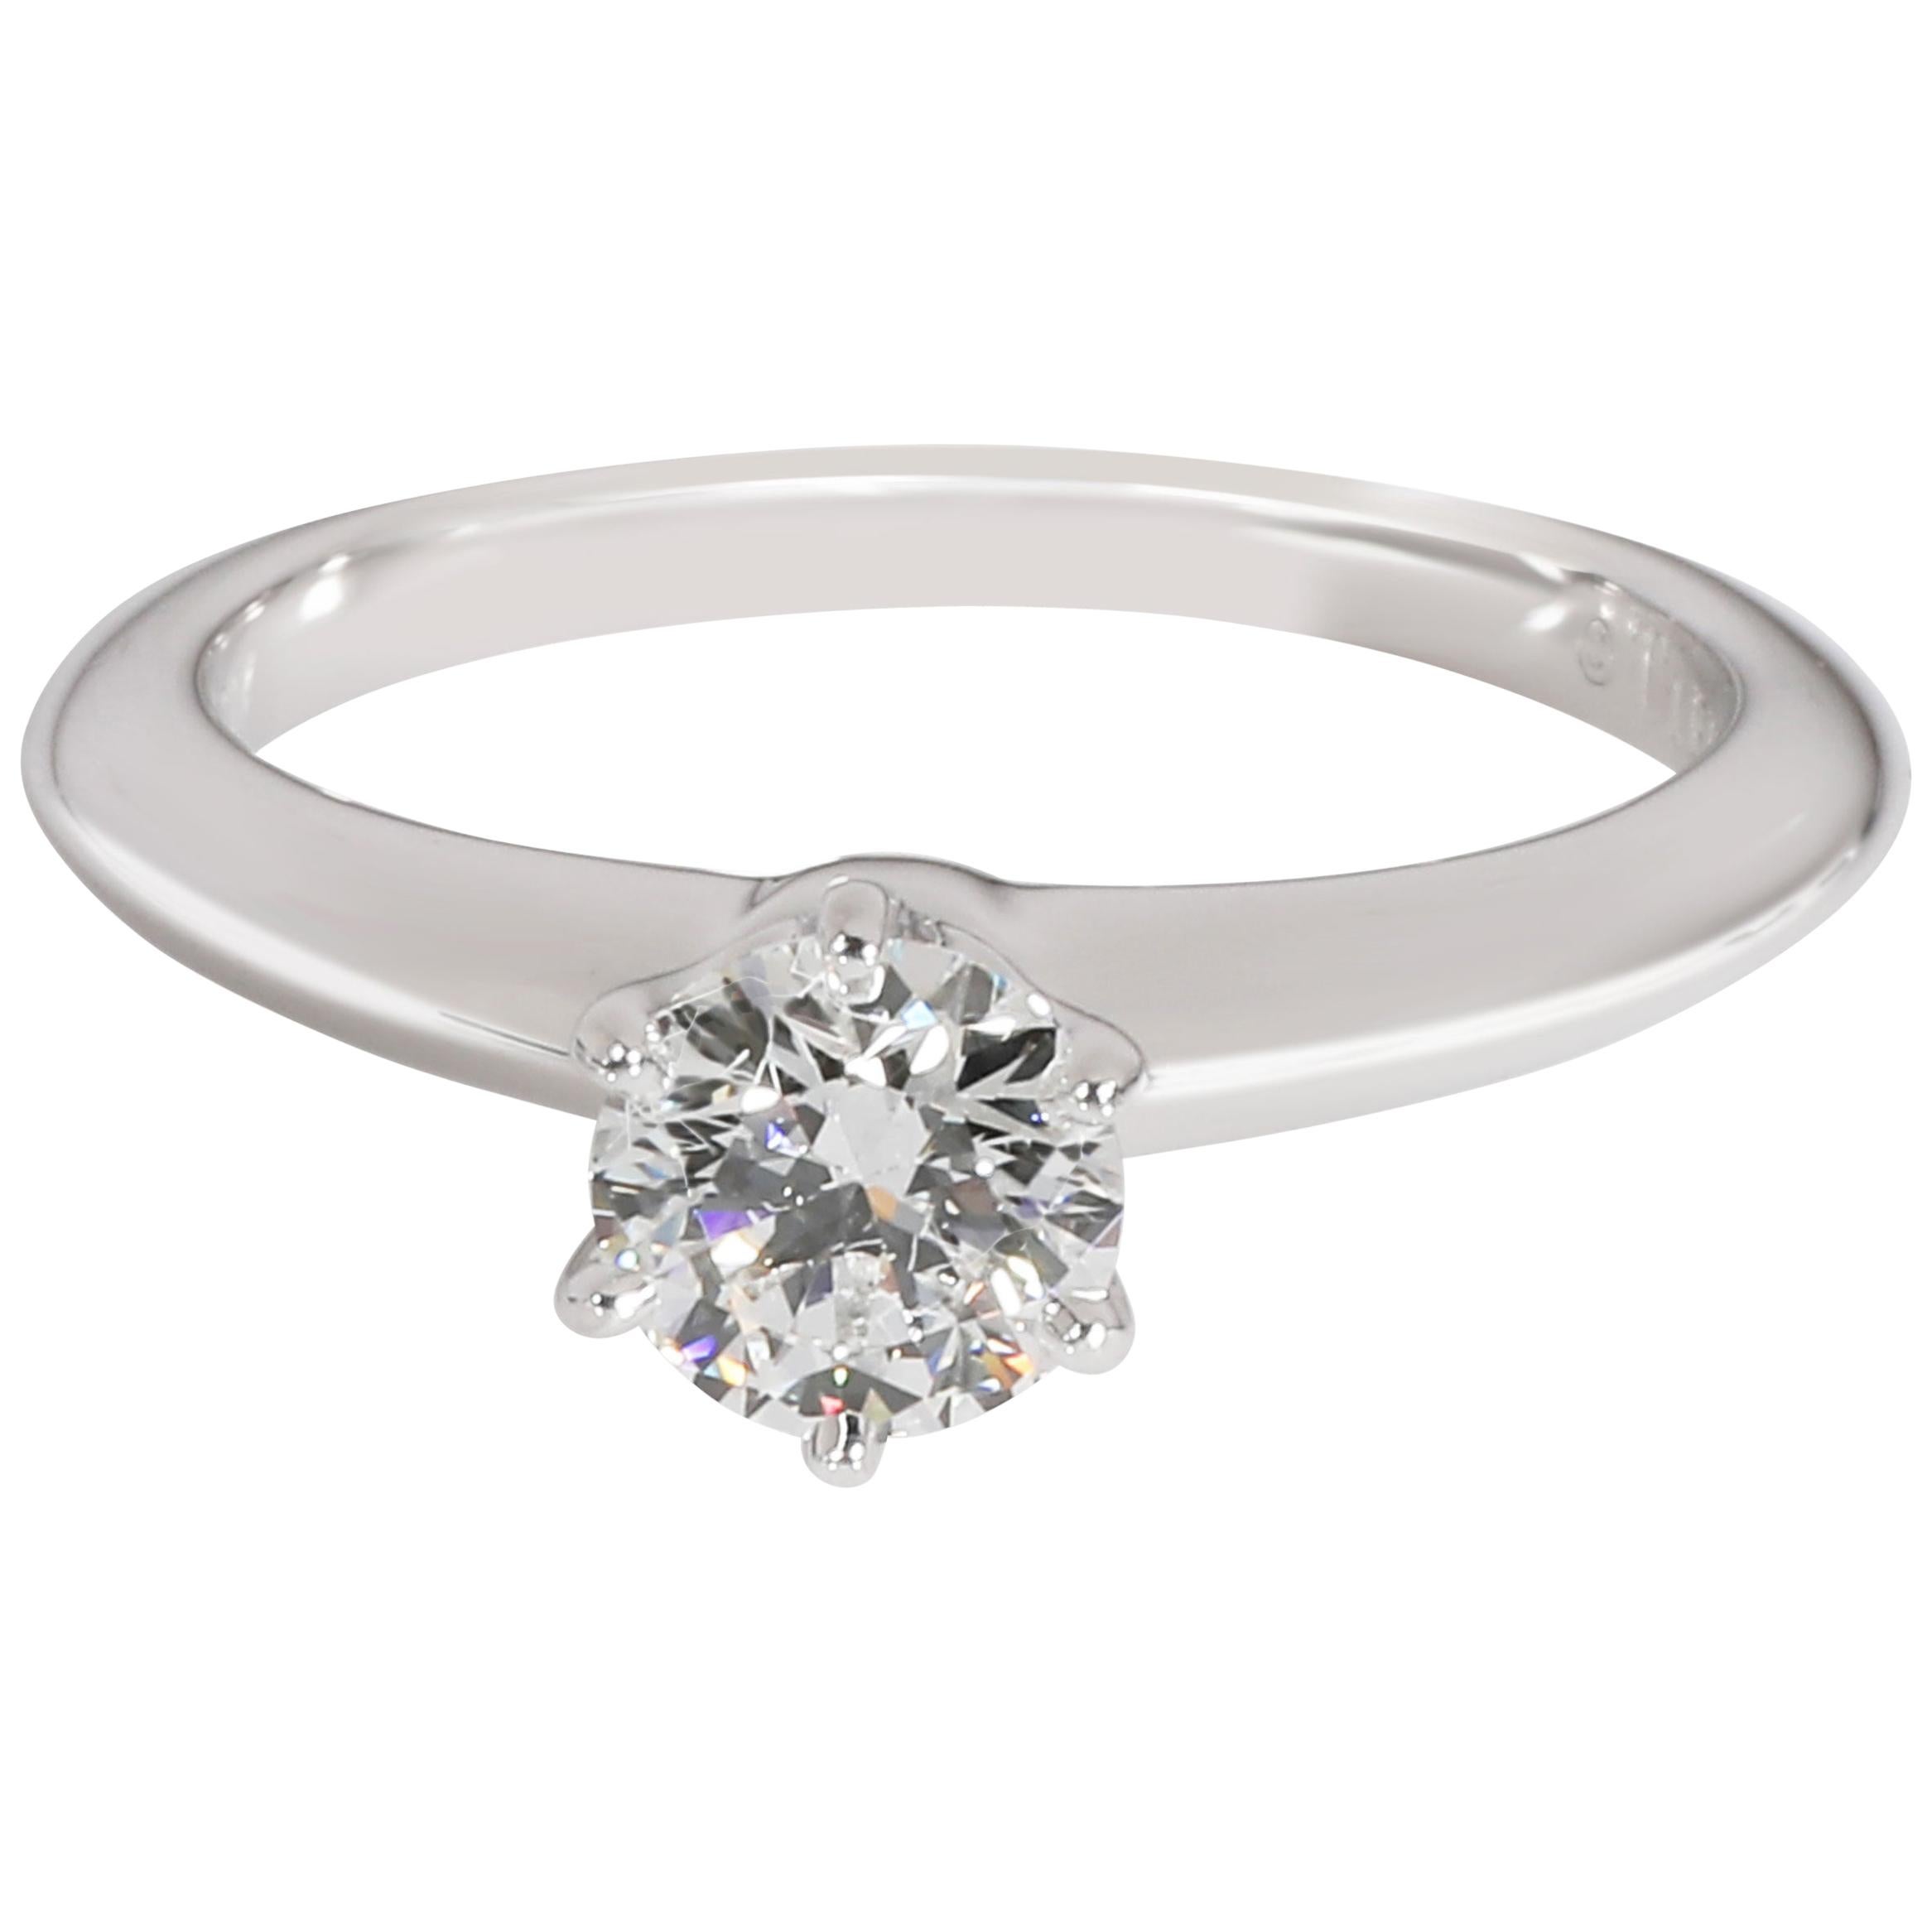 Tiffany & Co. Solitaire Diamond Engagement Ring in Platinum E VVS2 0.43 Carat